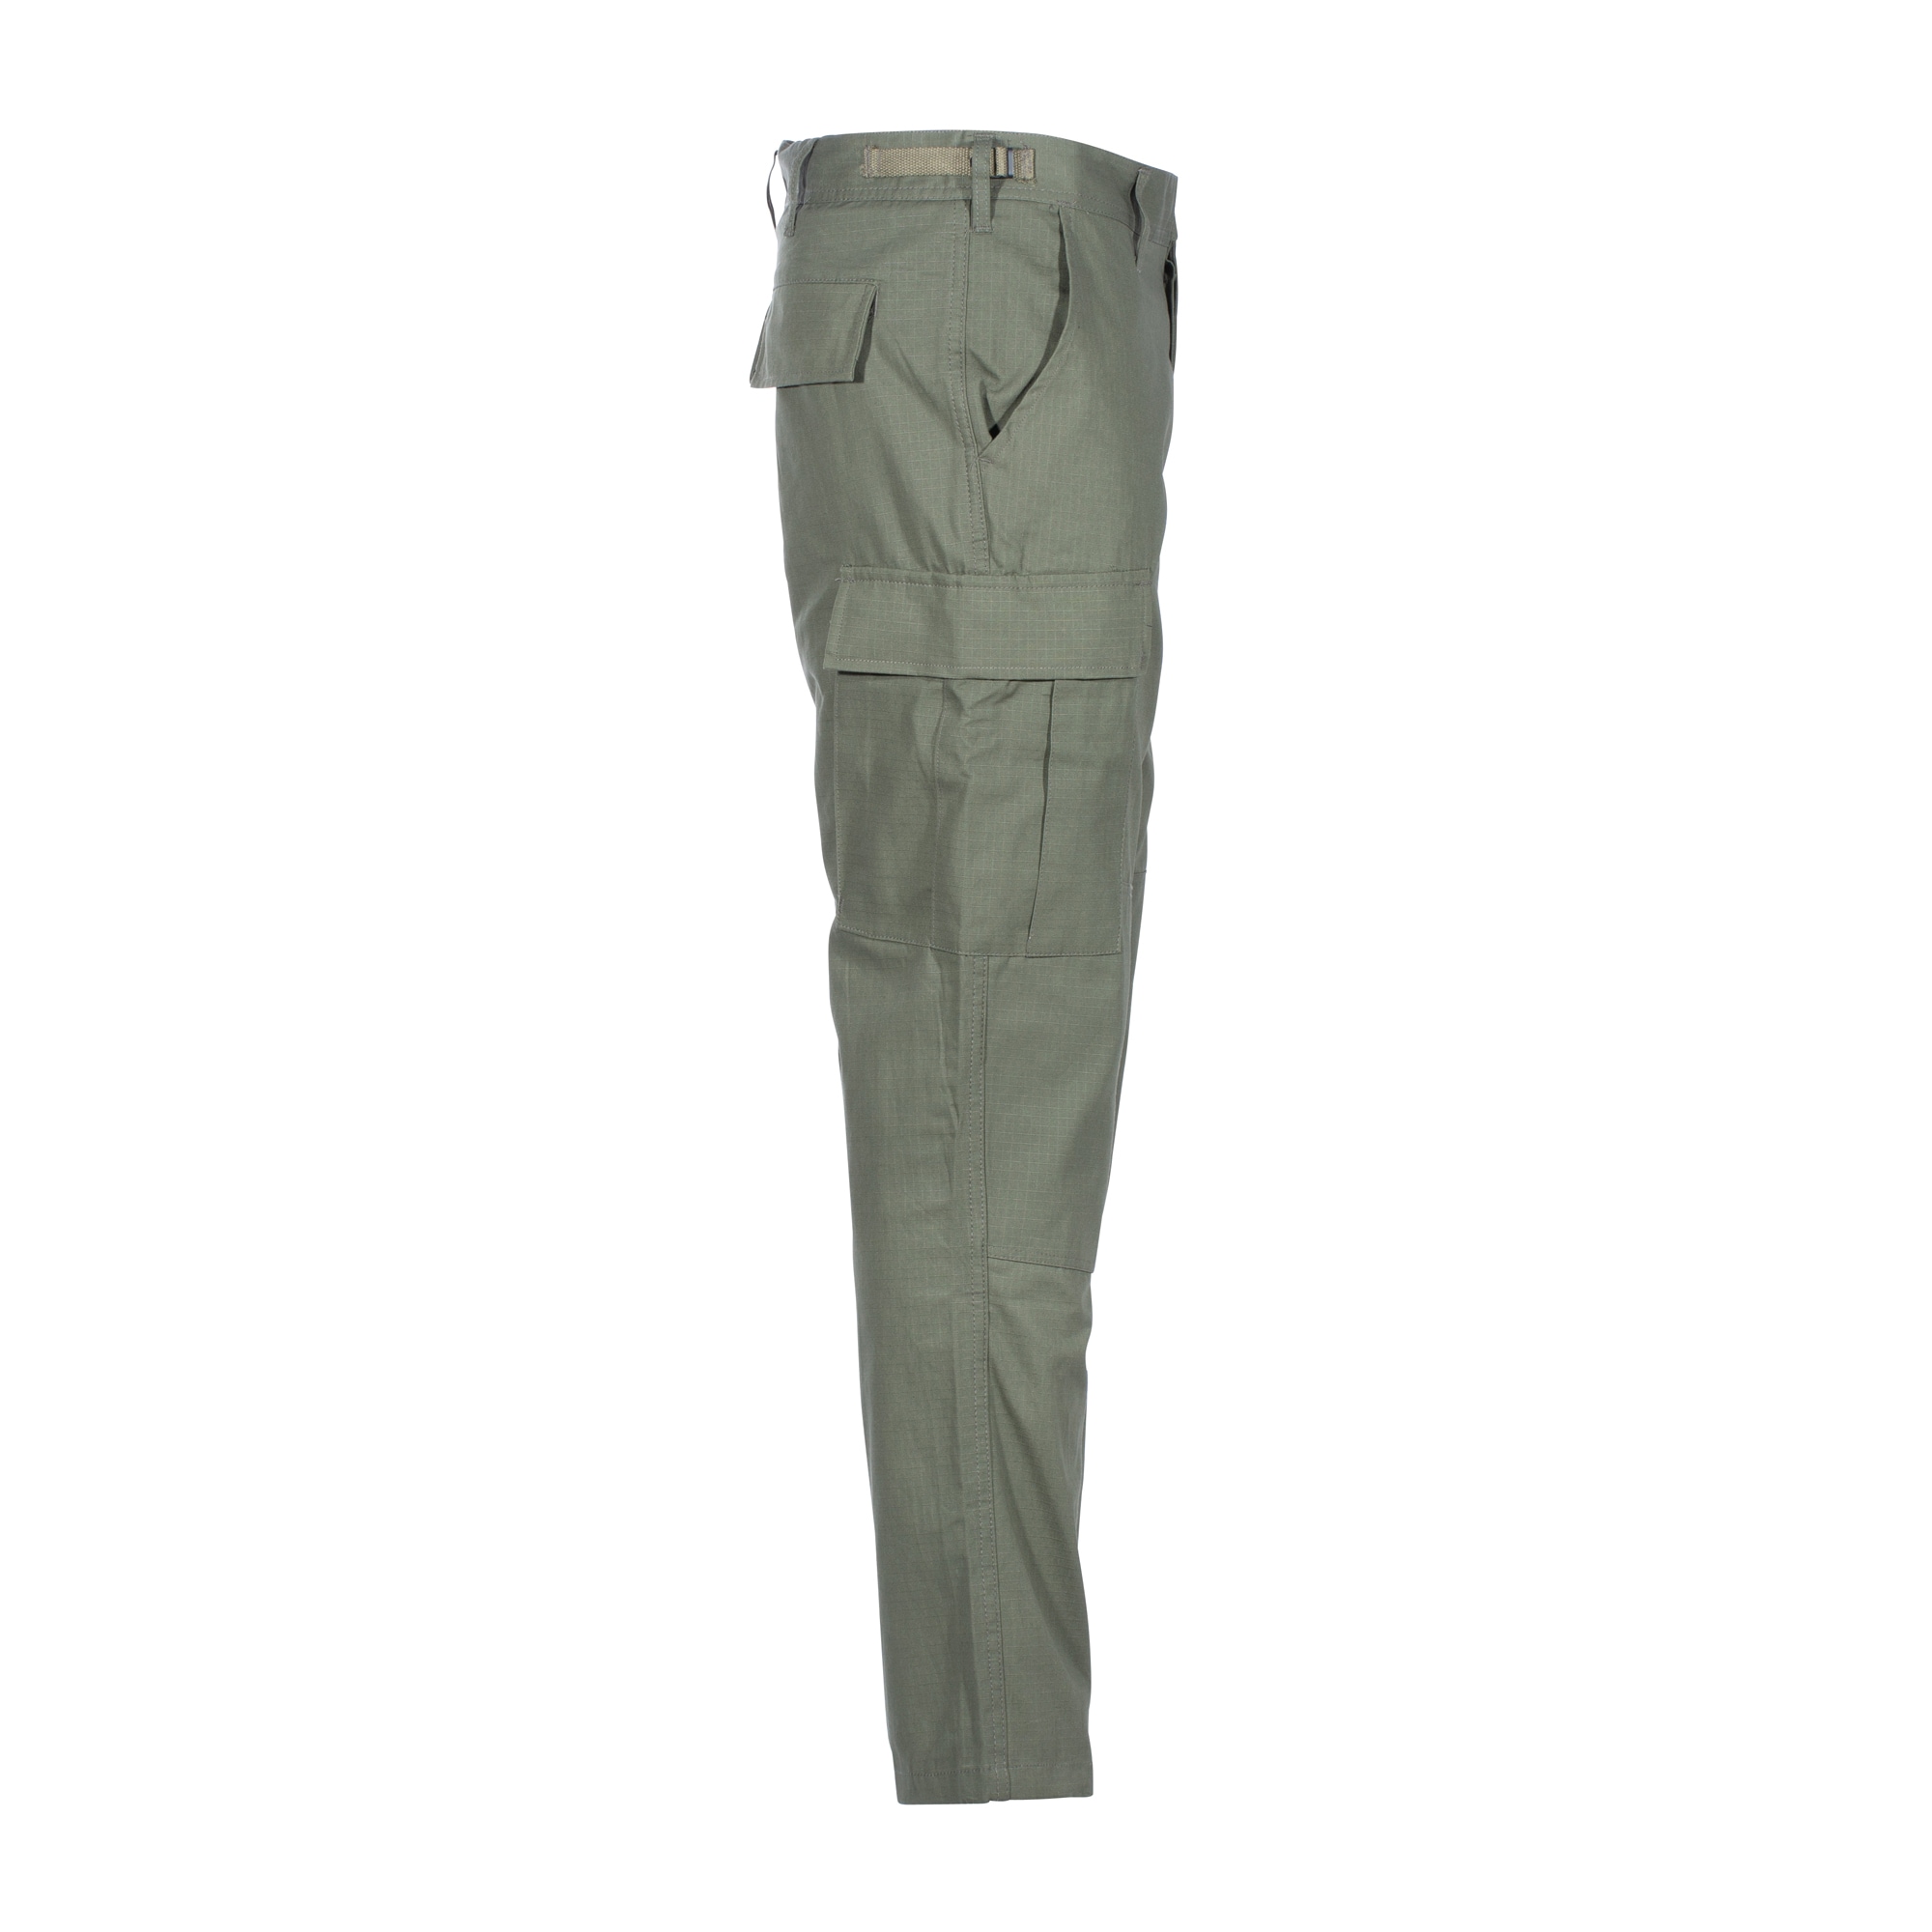 Purchase the Teesar US BDU Pants Slim Fit olive by ASMC